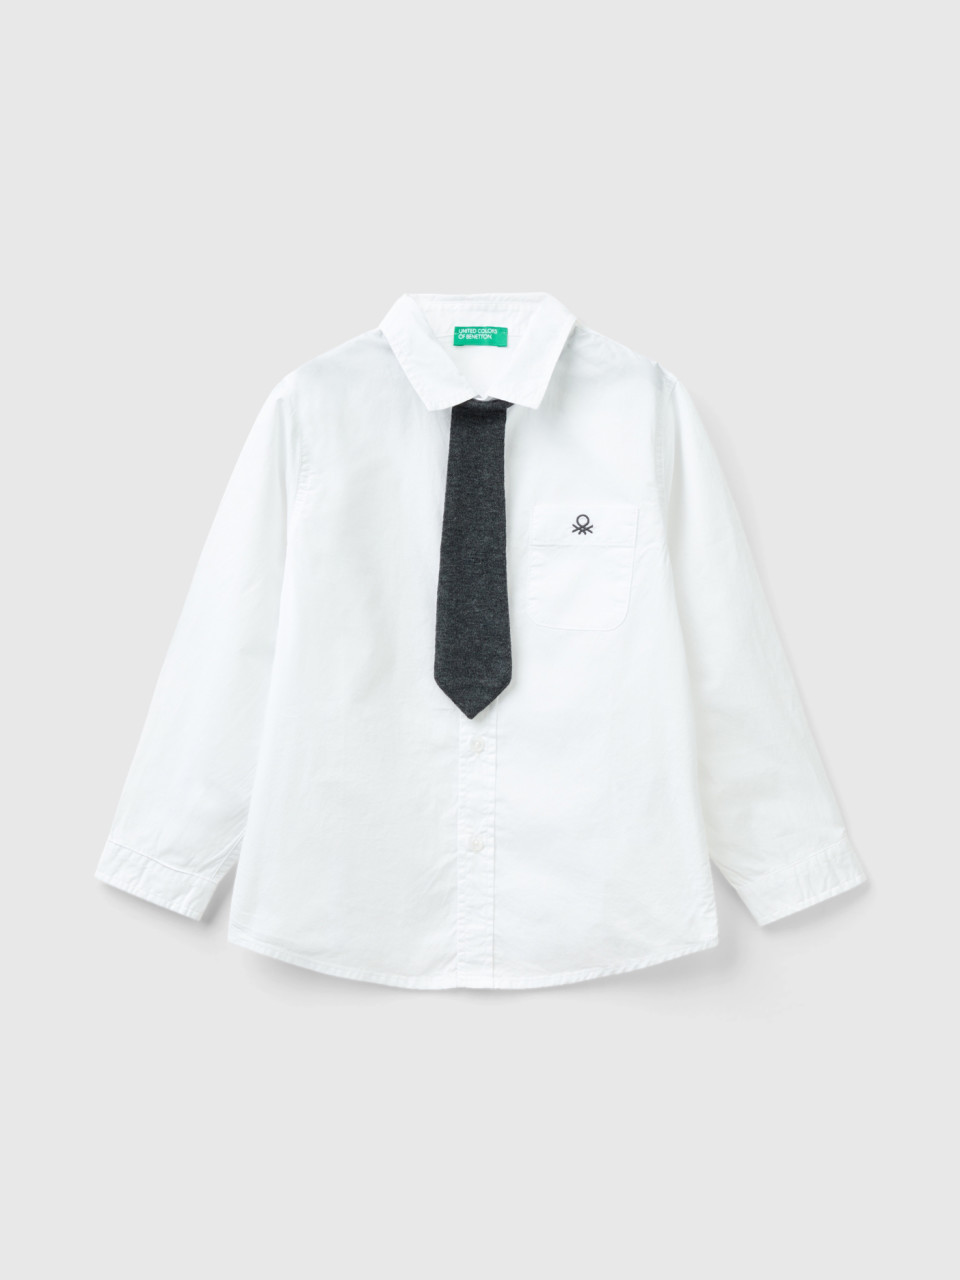 Benetton, Hemd Mit Abnehmbarer Krawatte, Weiss, male